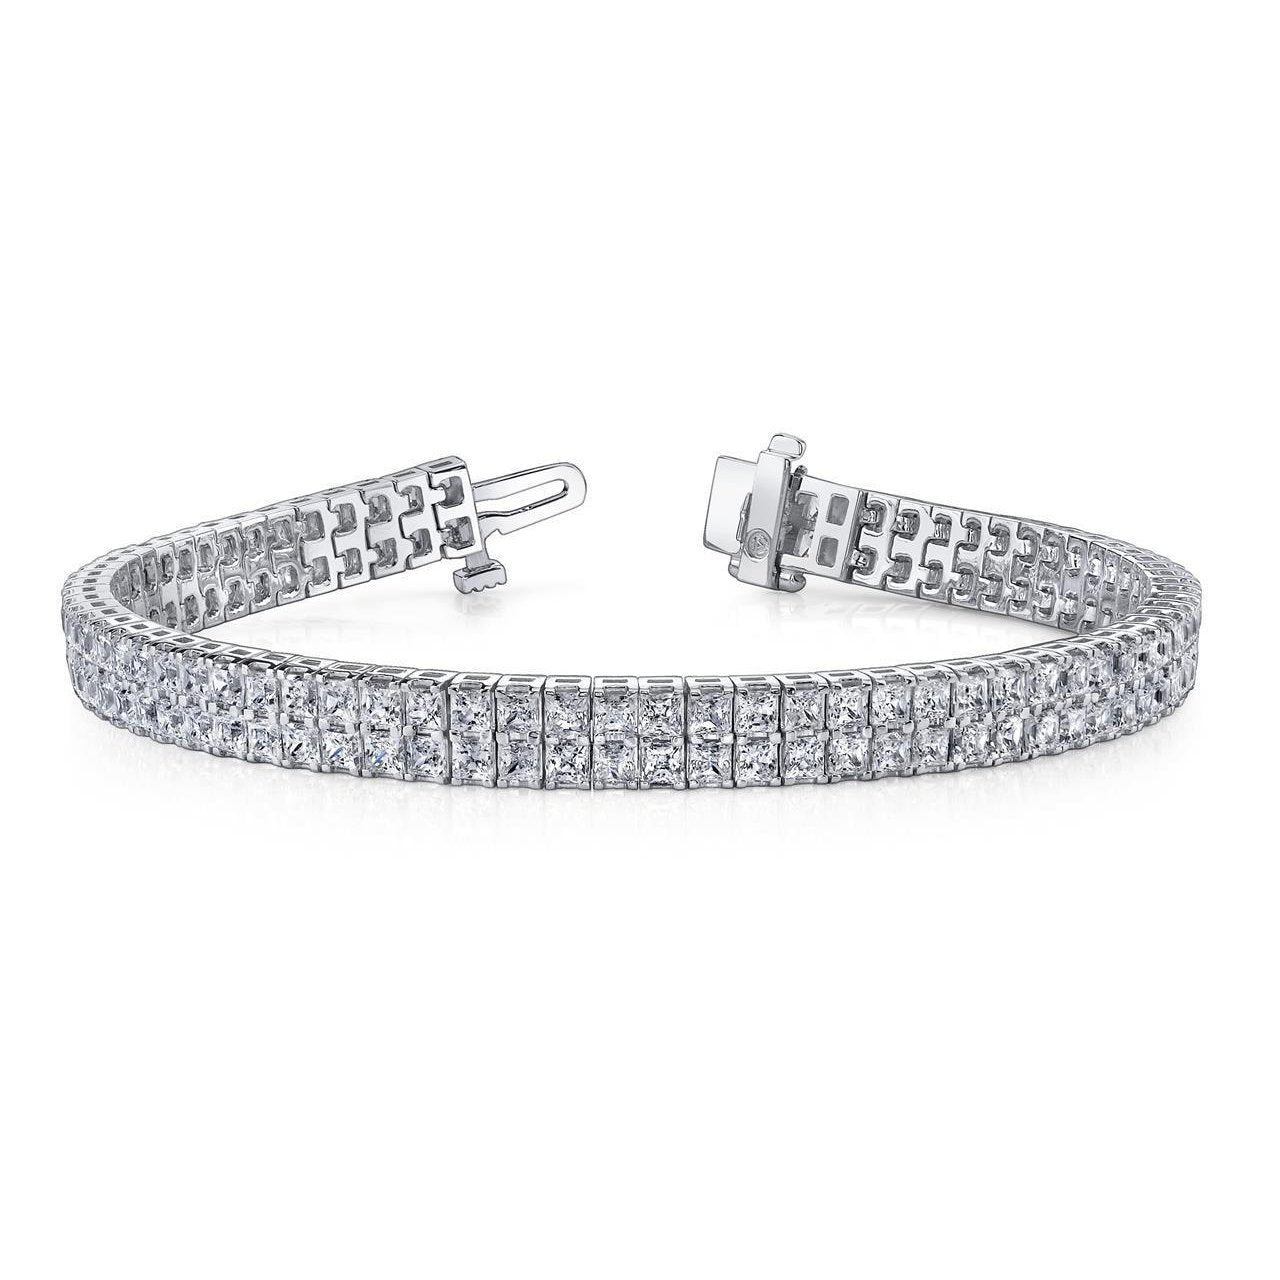 White Gold 14K Princess Cut 20.10 Carats Sparkling Genuine Diamonds Bracelet